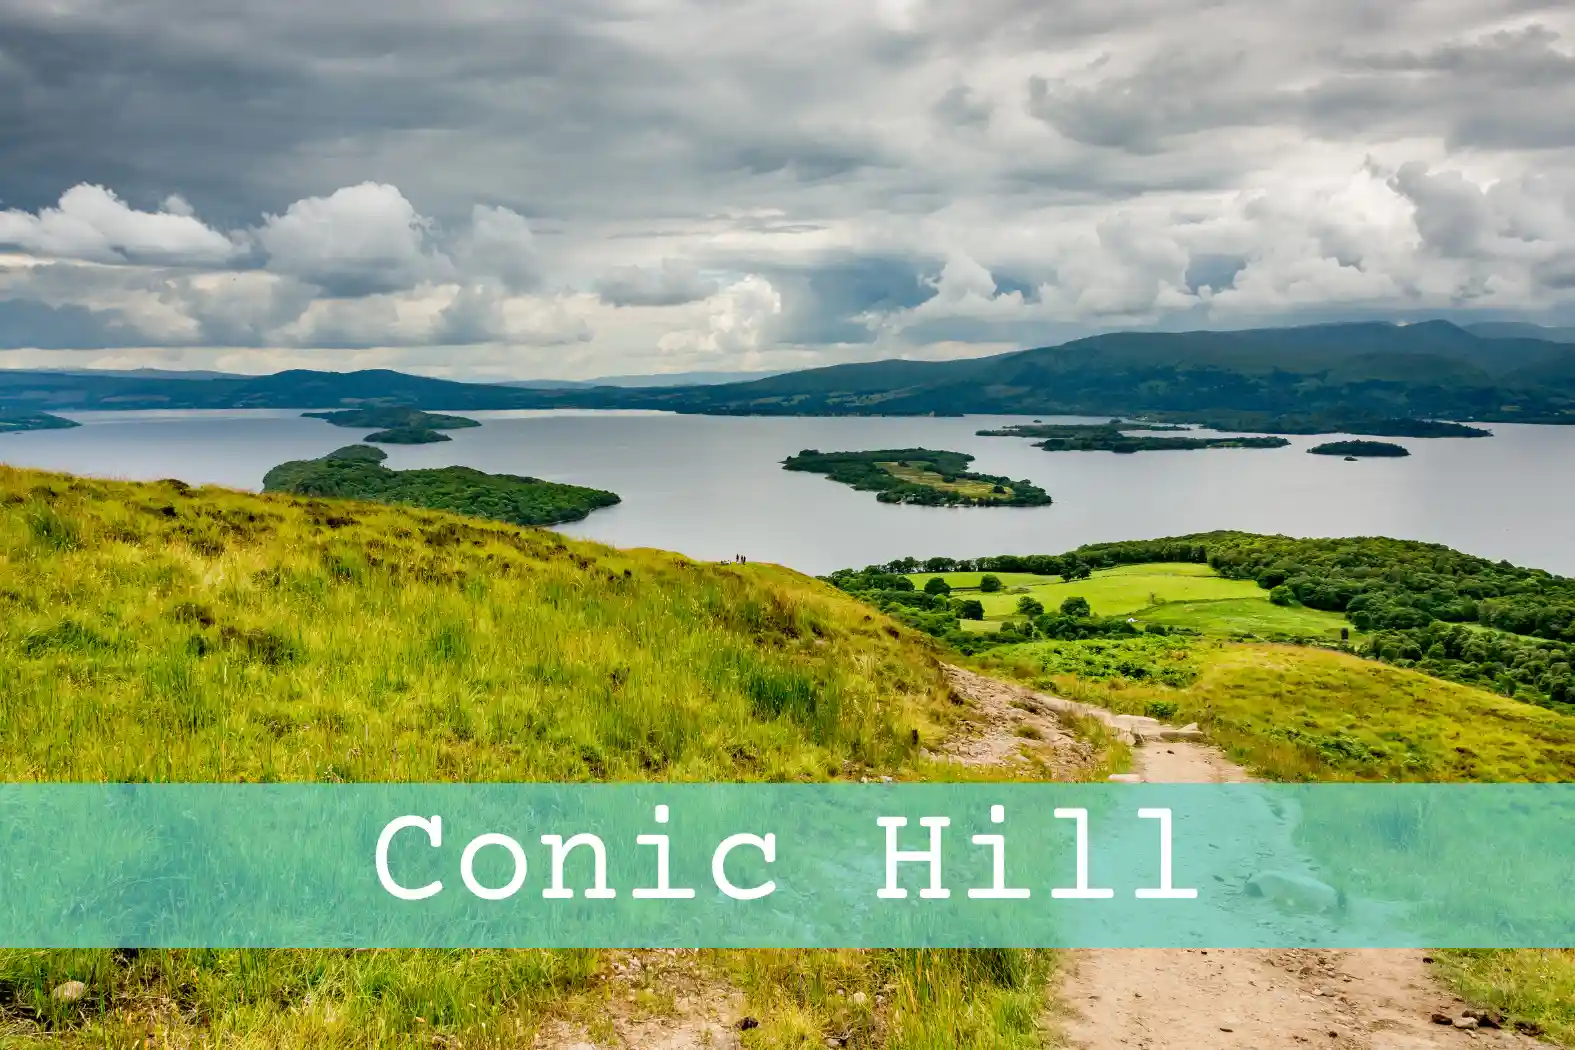 Conic Hill